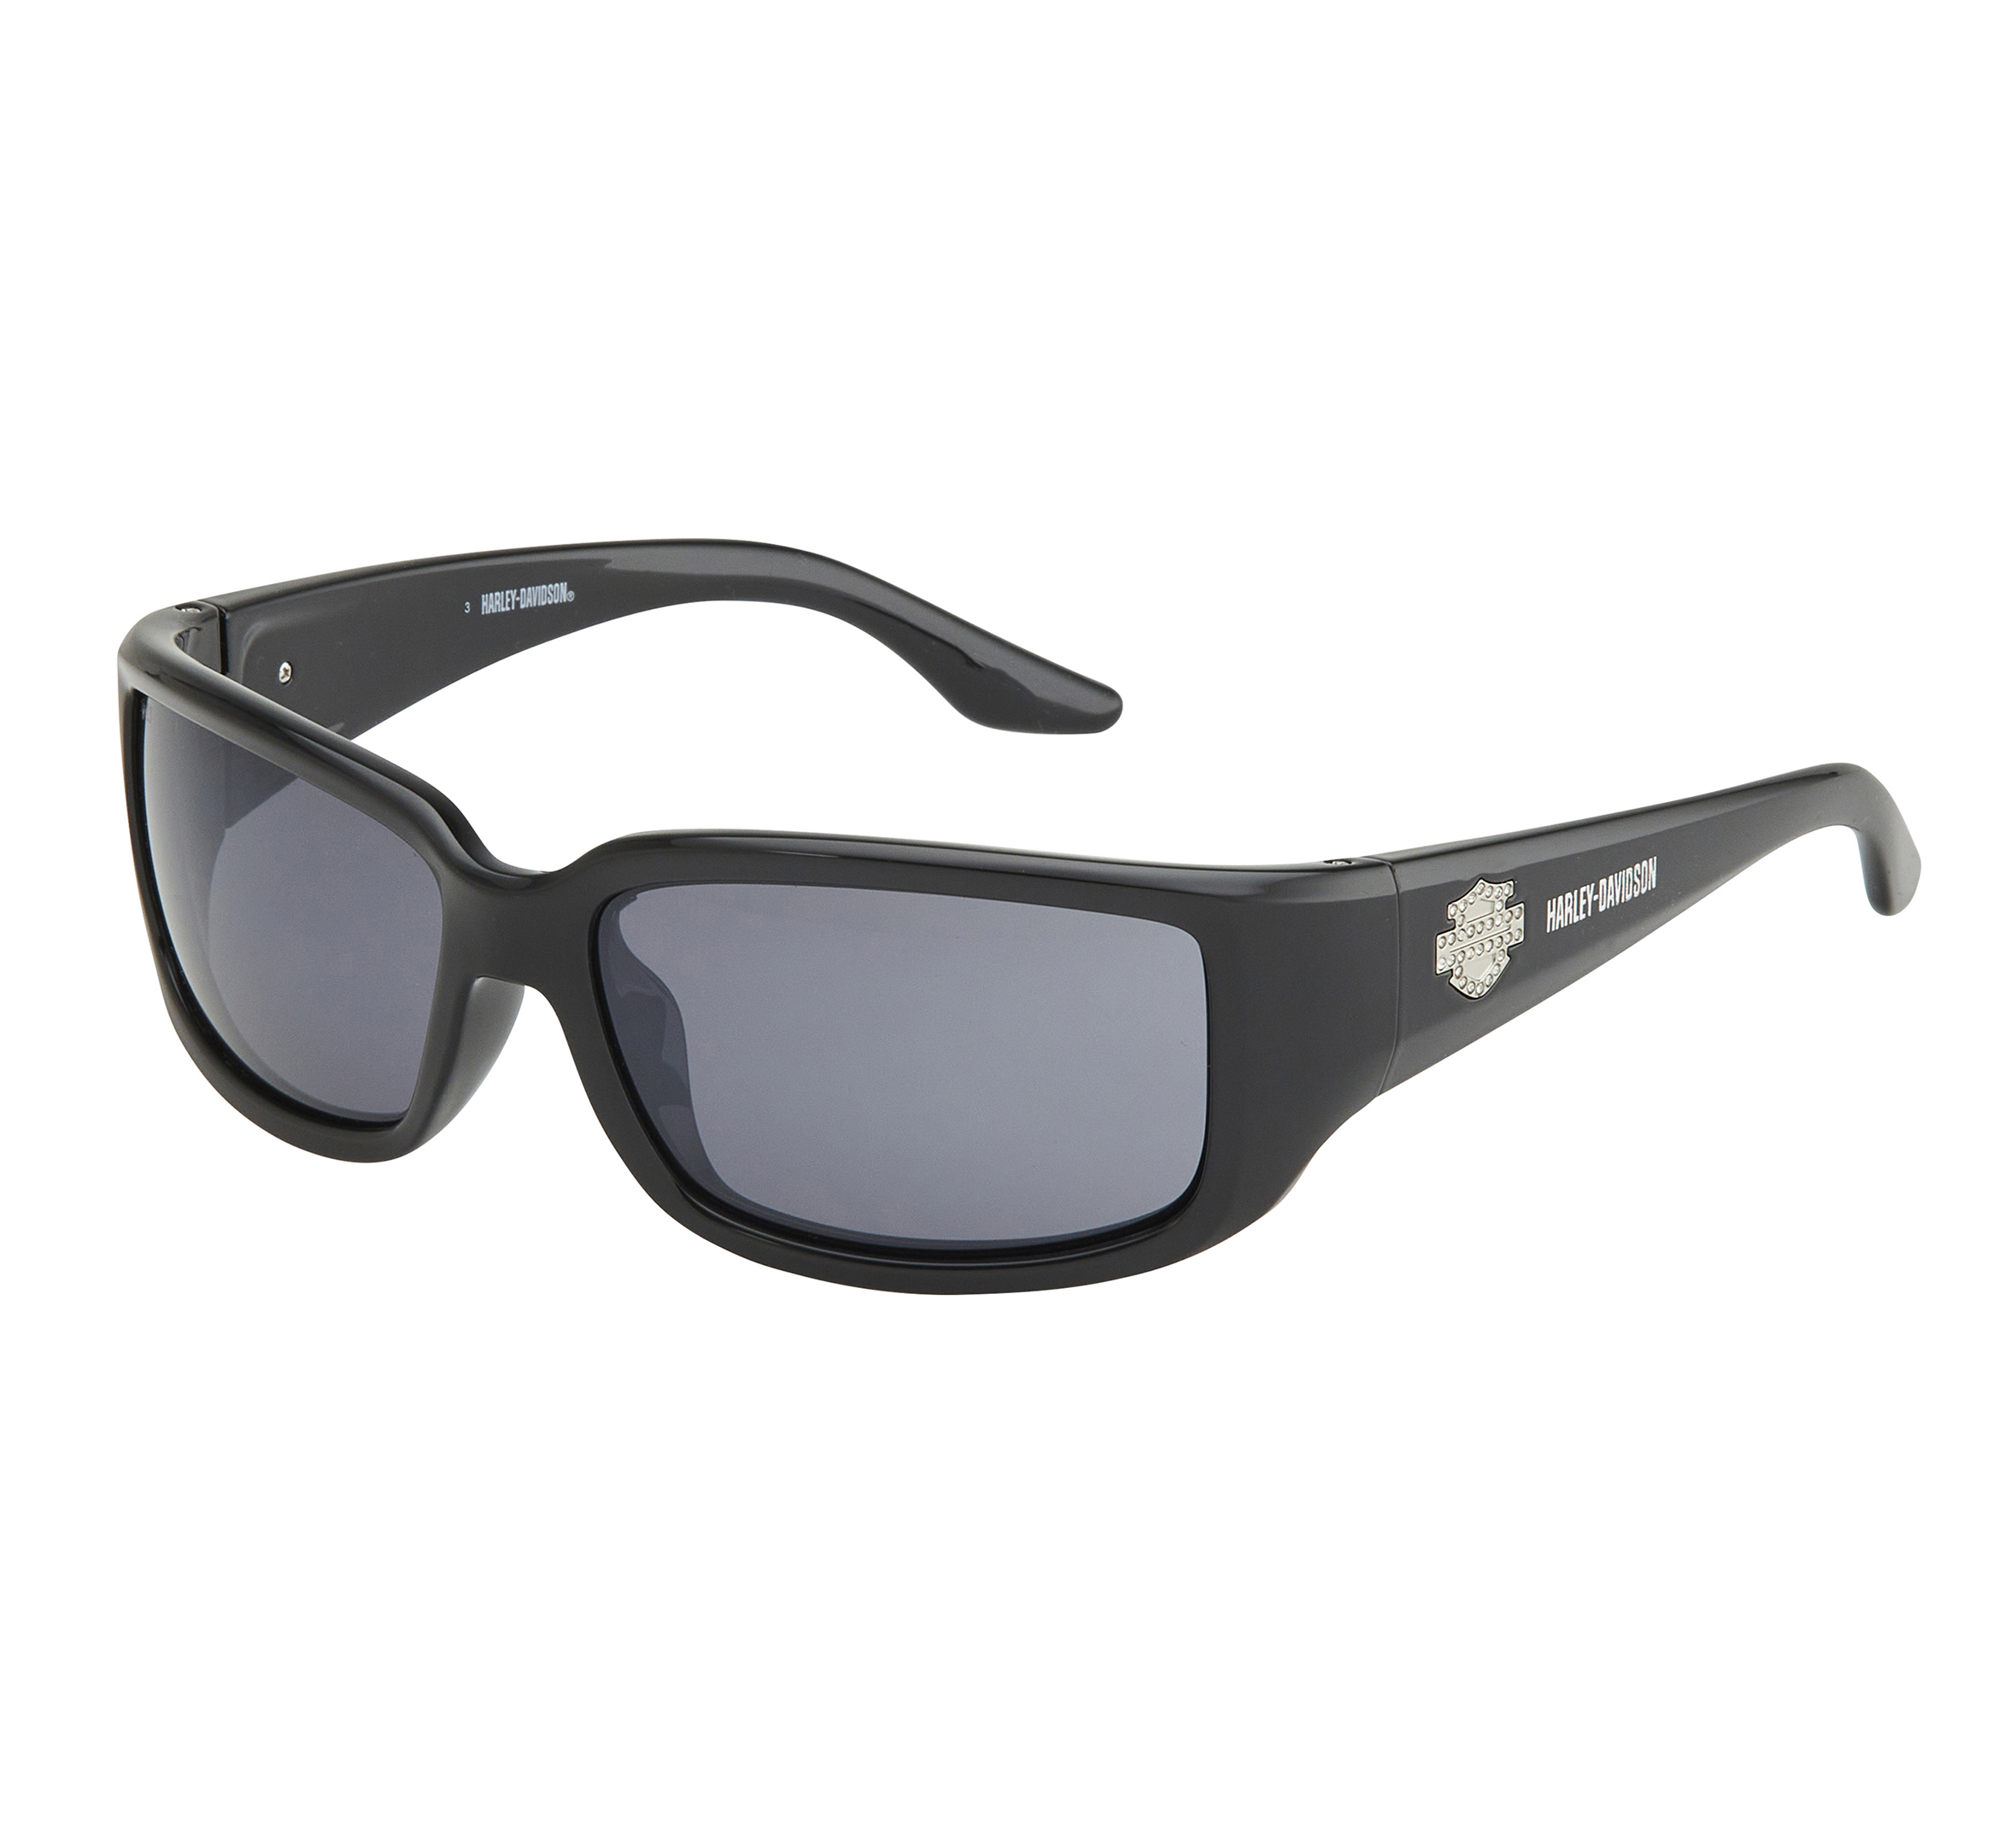 RACE HER Sport Performance Sunglasses - Shiny Black | Harley-Davidson USA